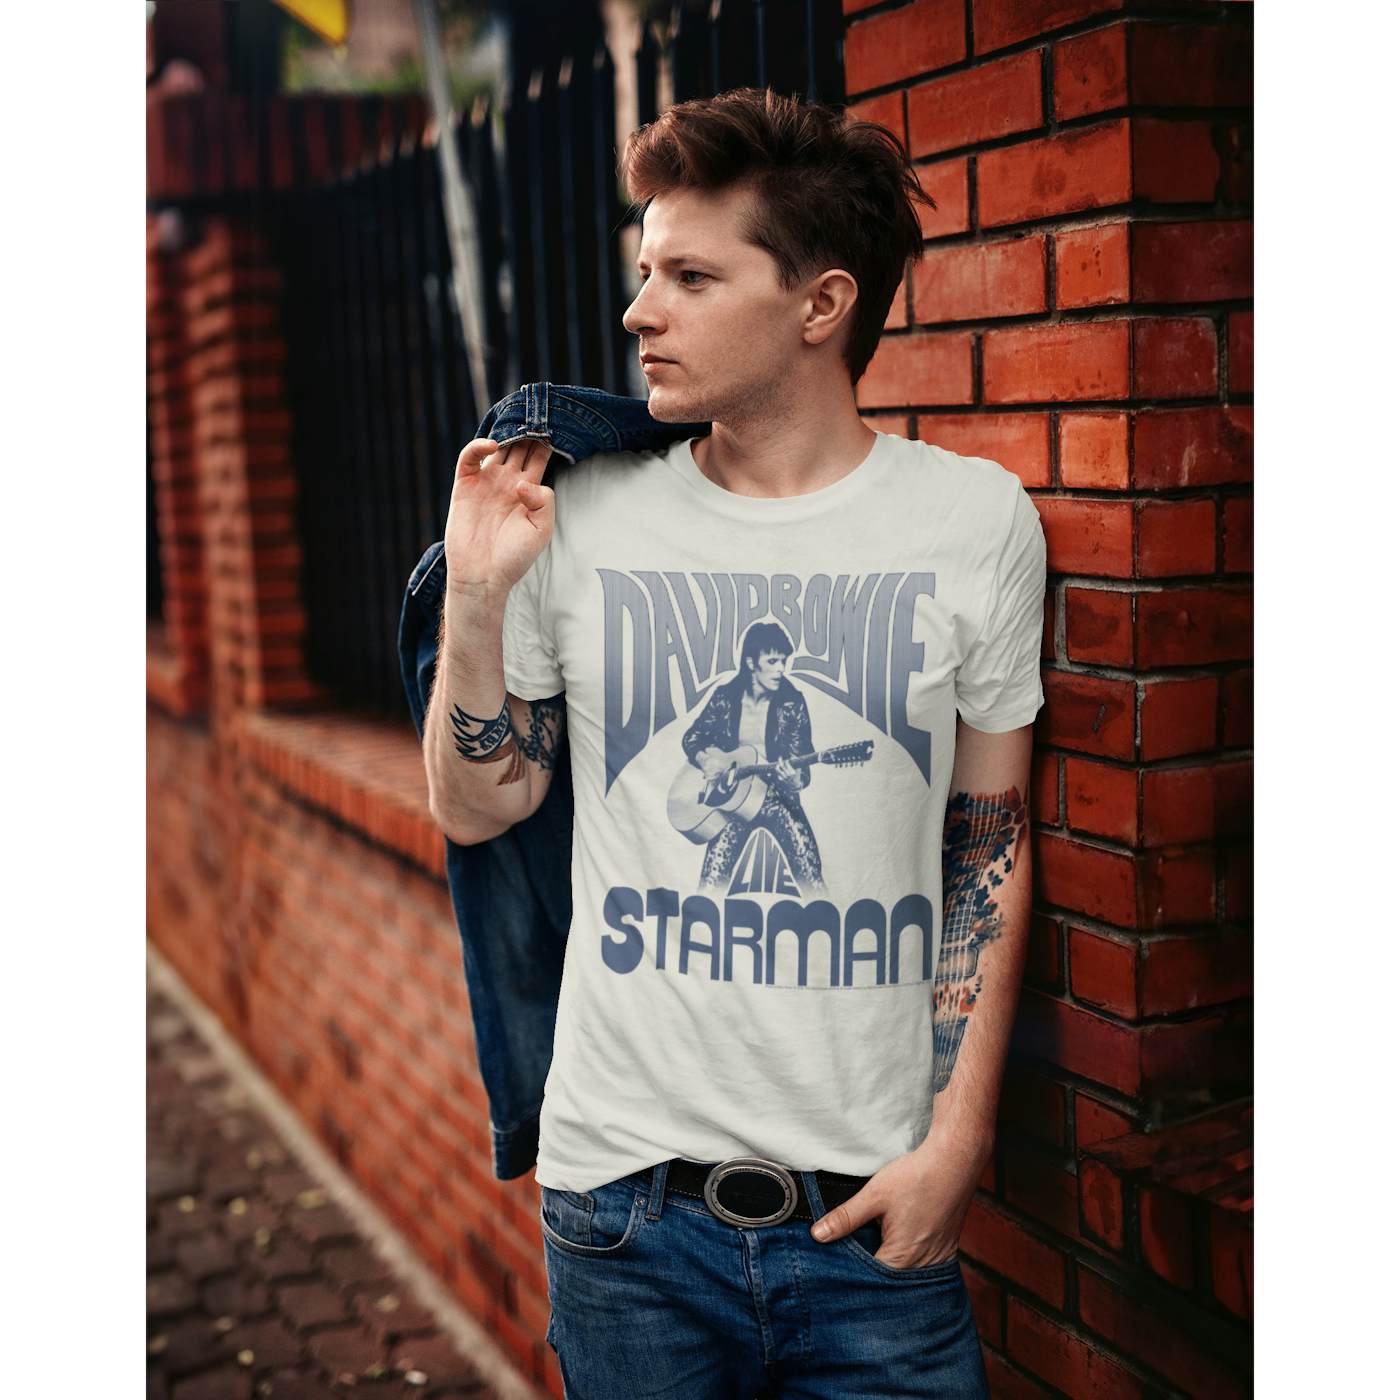 David Bowie T-Shirt | Starman Live (Merchbar Exclusive